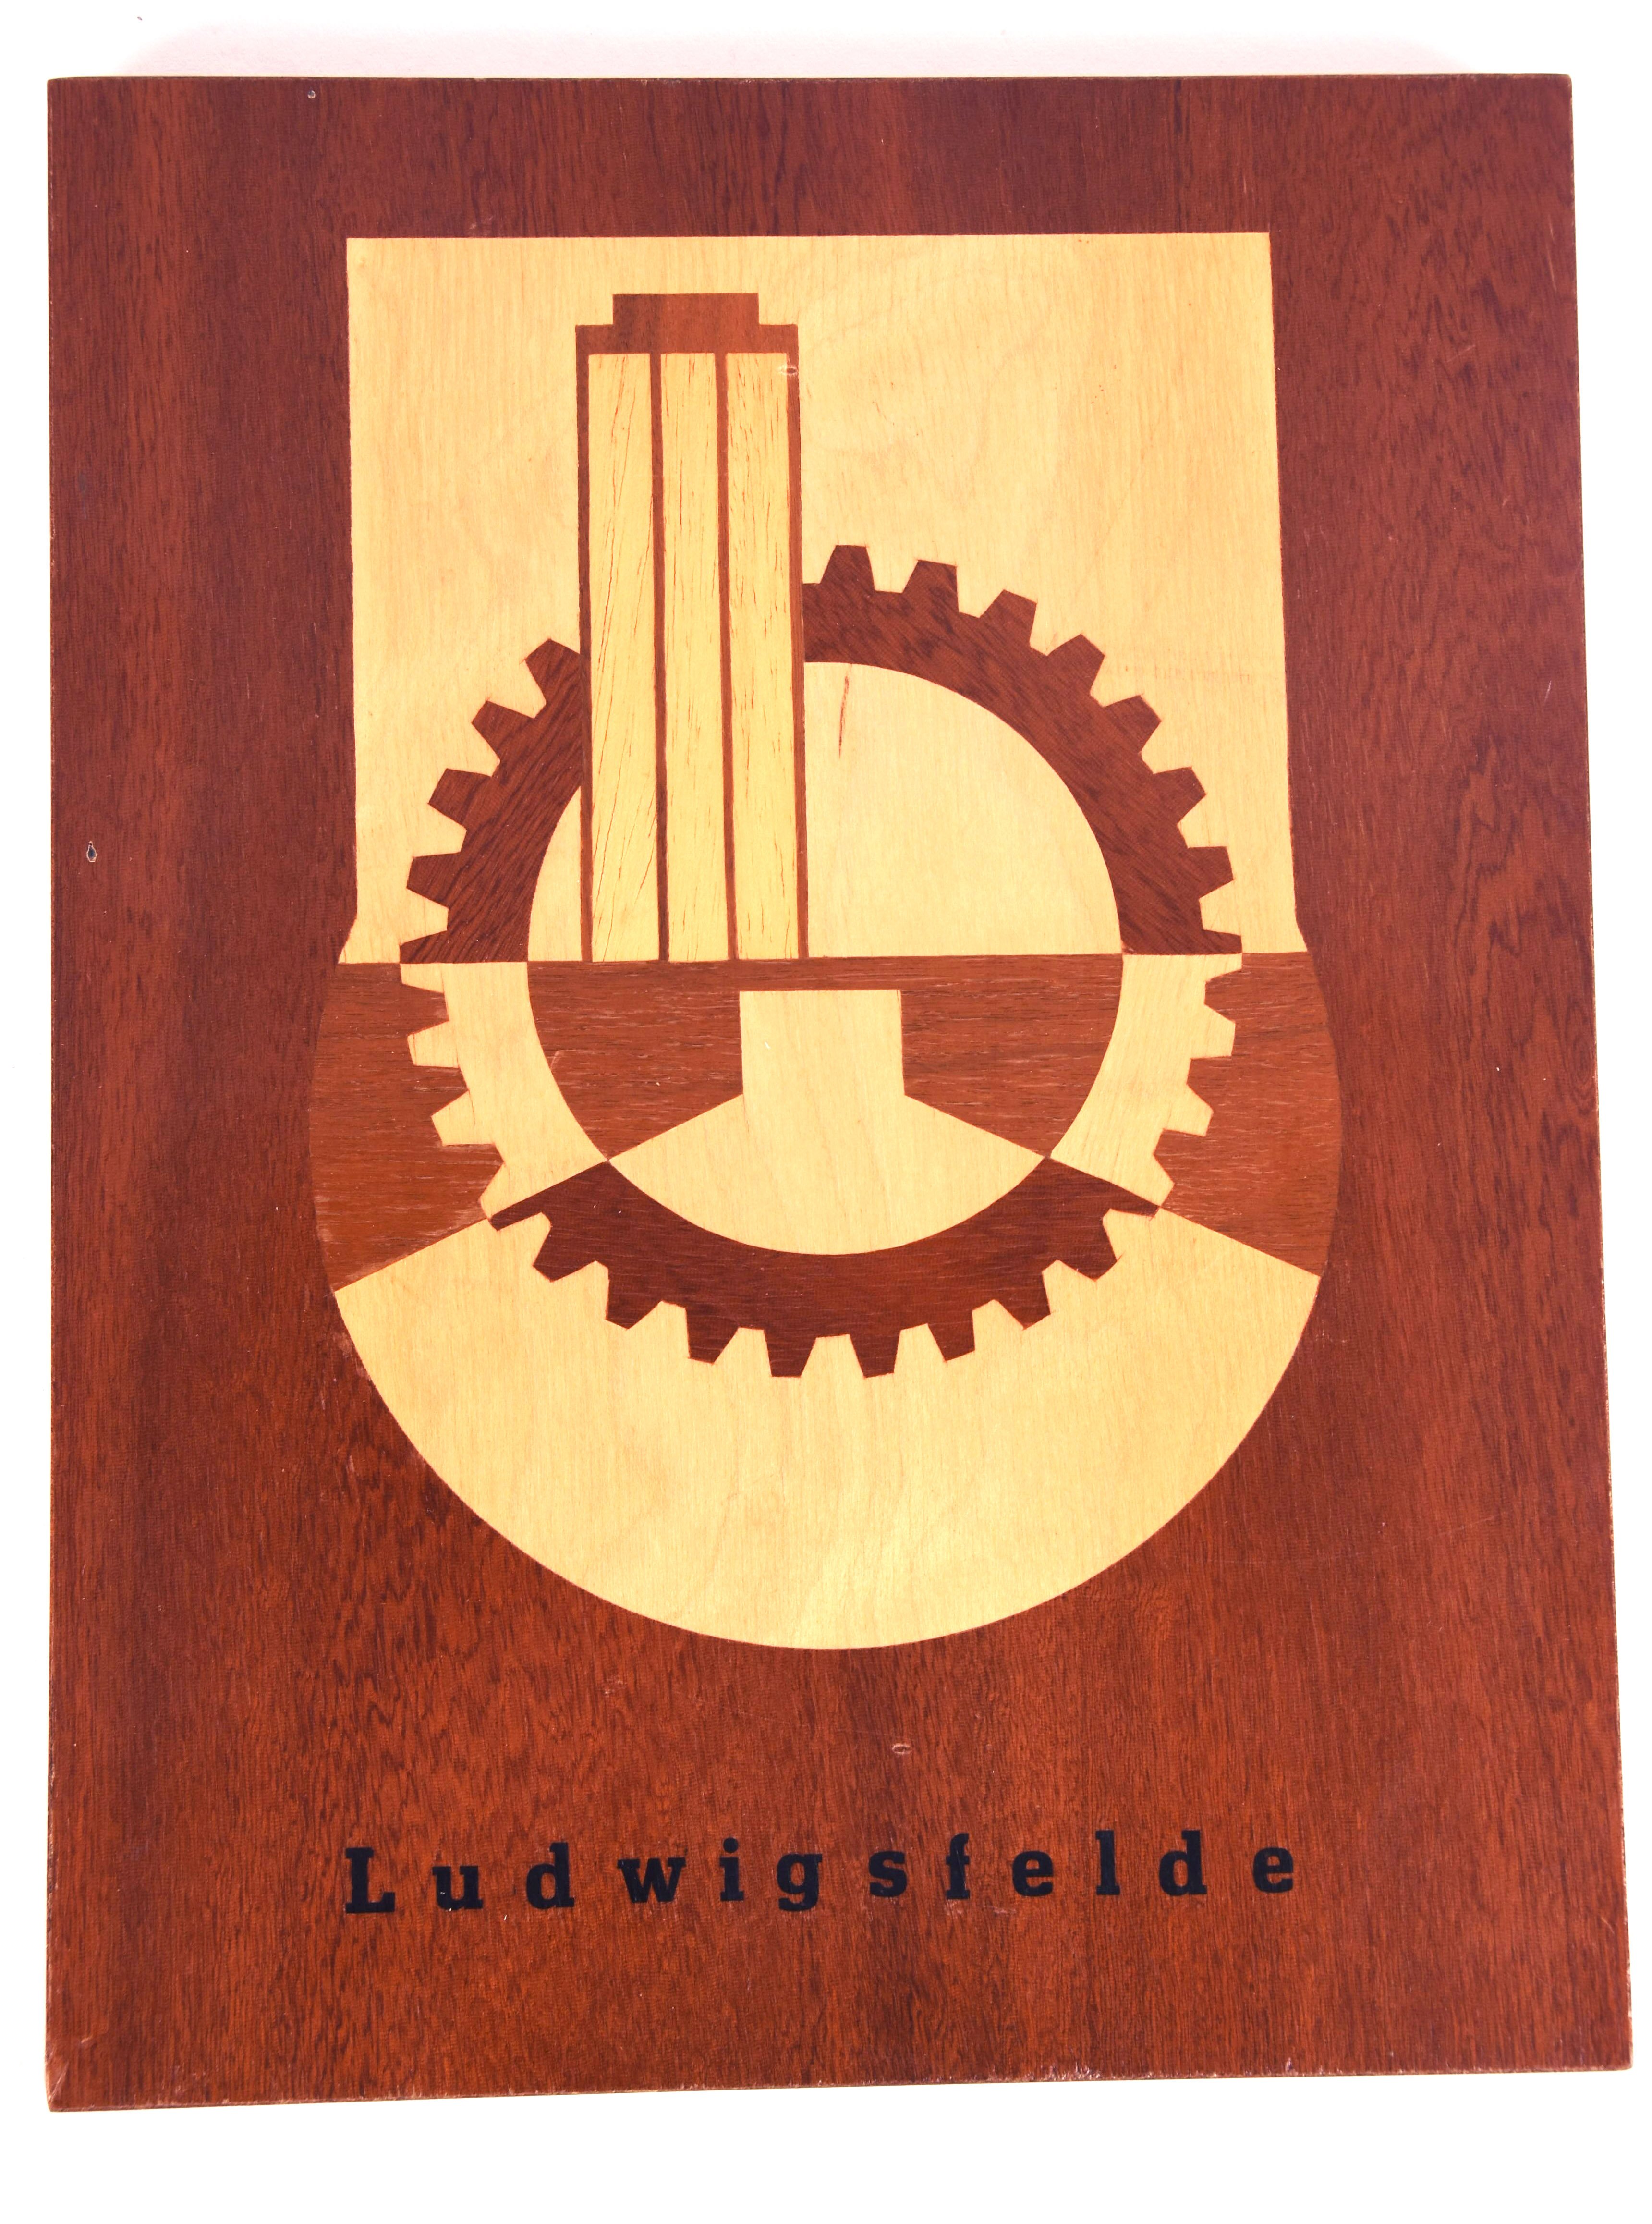 Intarsienbild "Ludwigsfelder Stadtwappen" (Stadt- und Technikmuseum Ludwigsfelde CC BY-NC-SA)